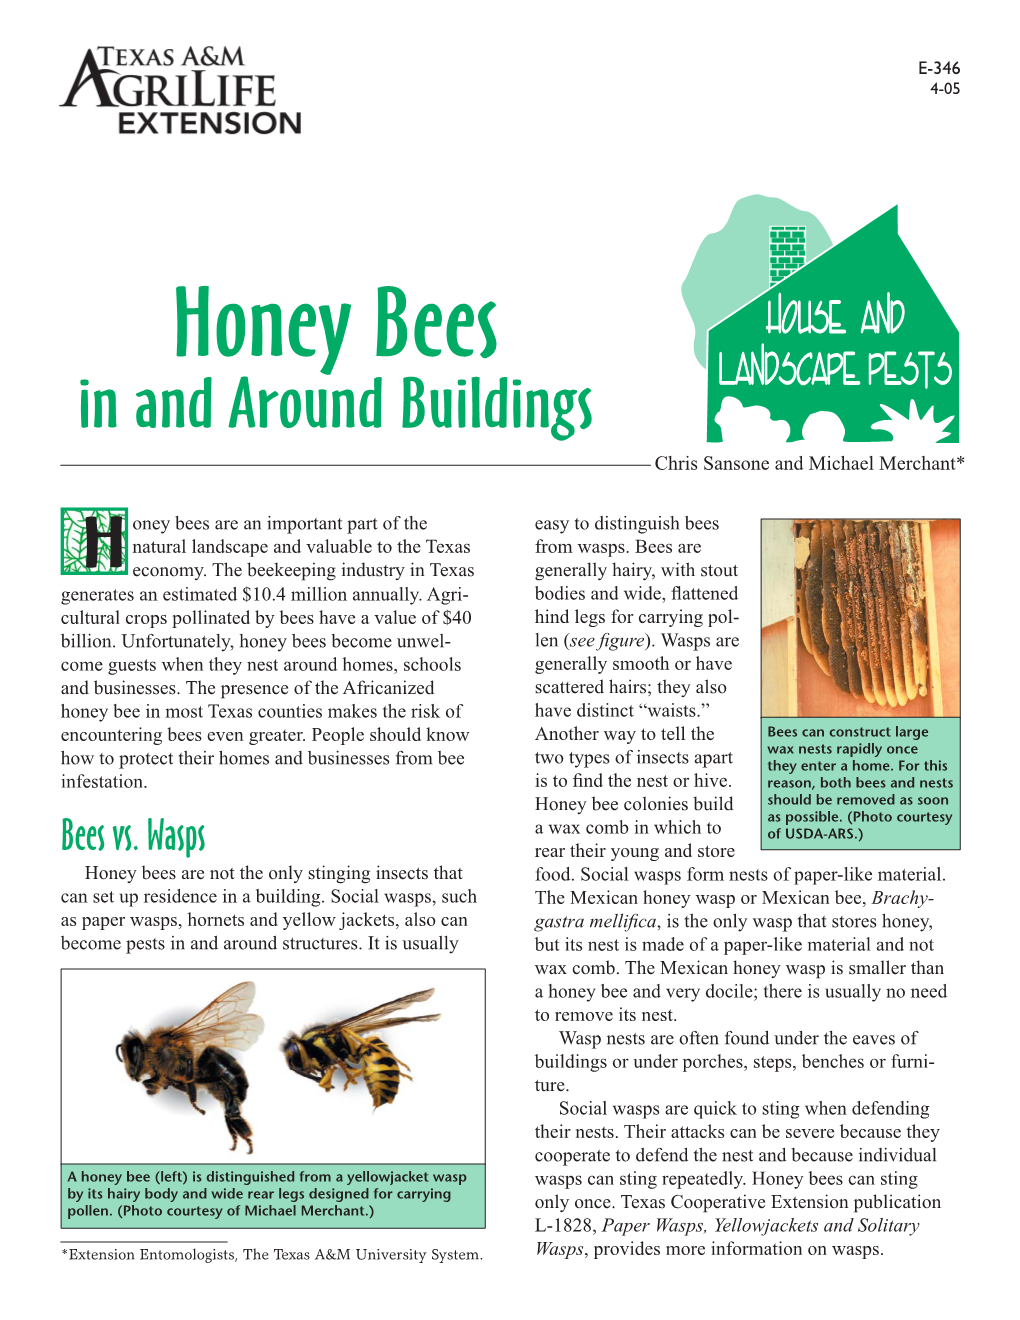 Honey Bees Around Buildings